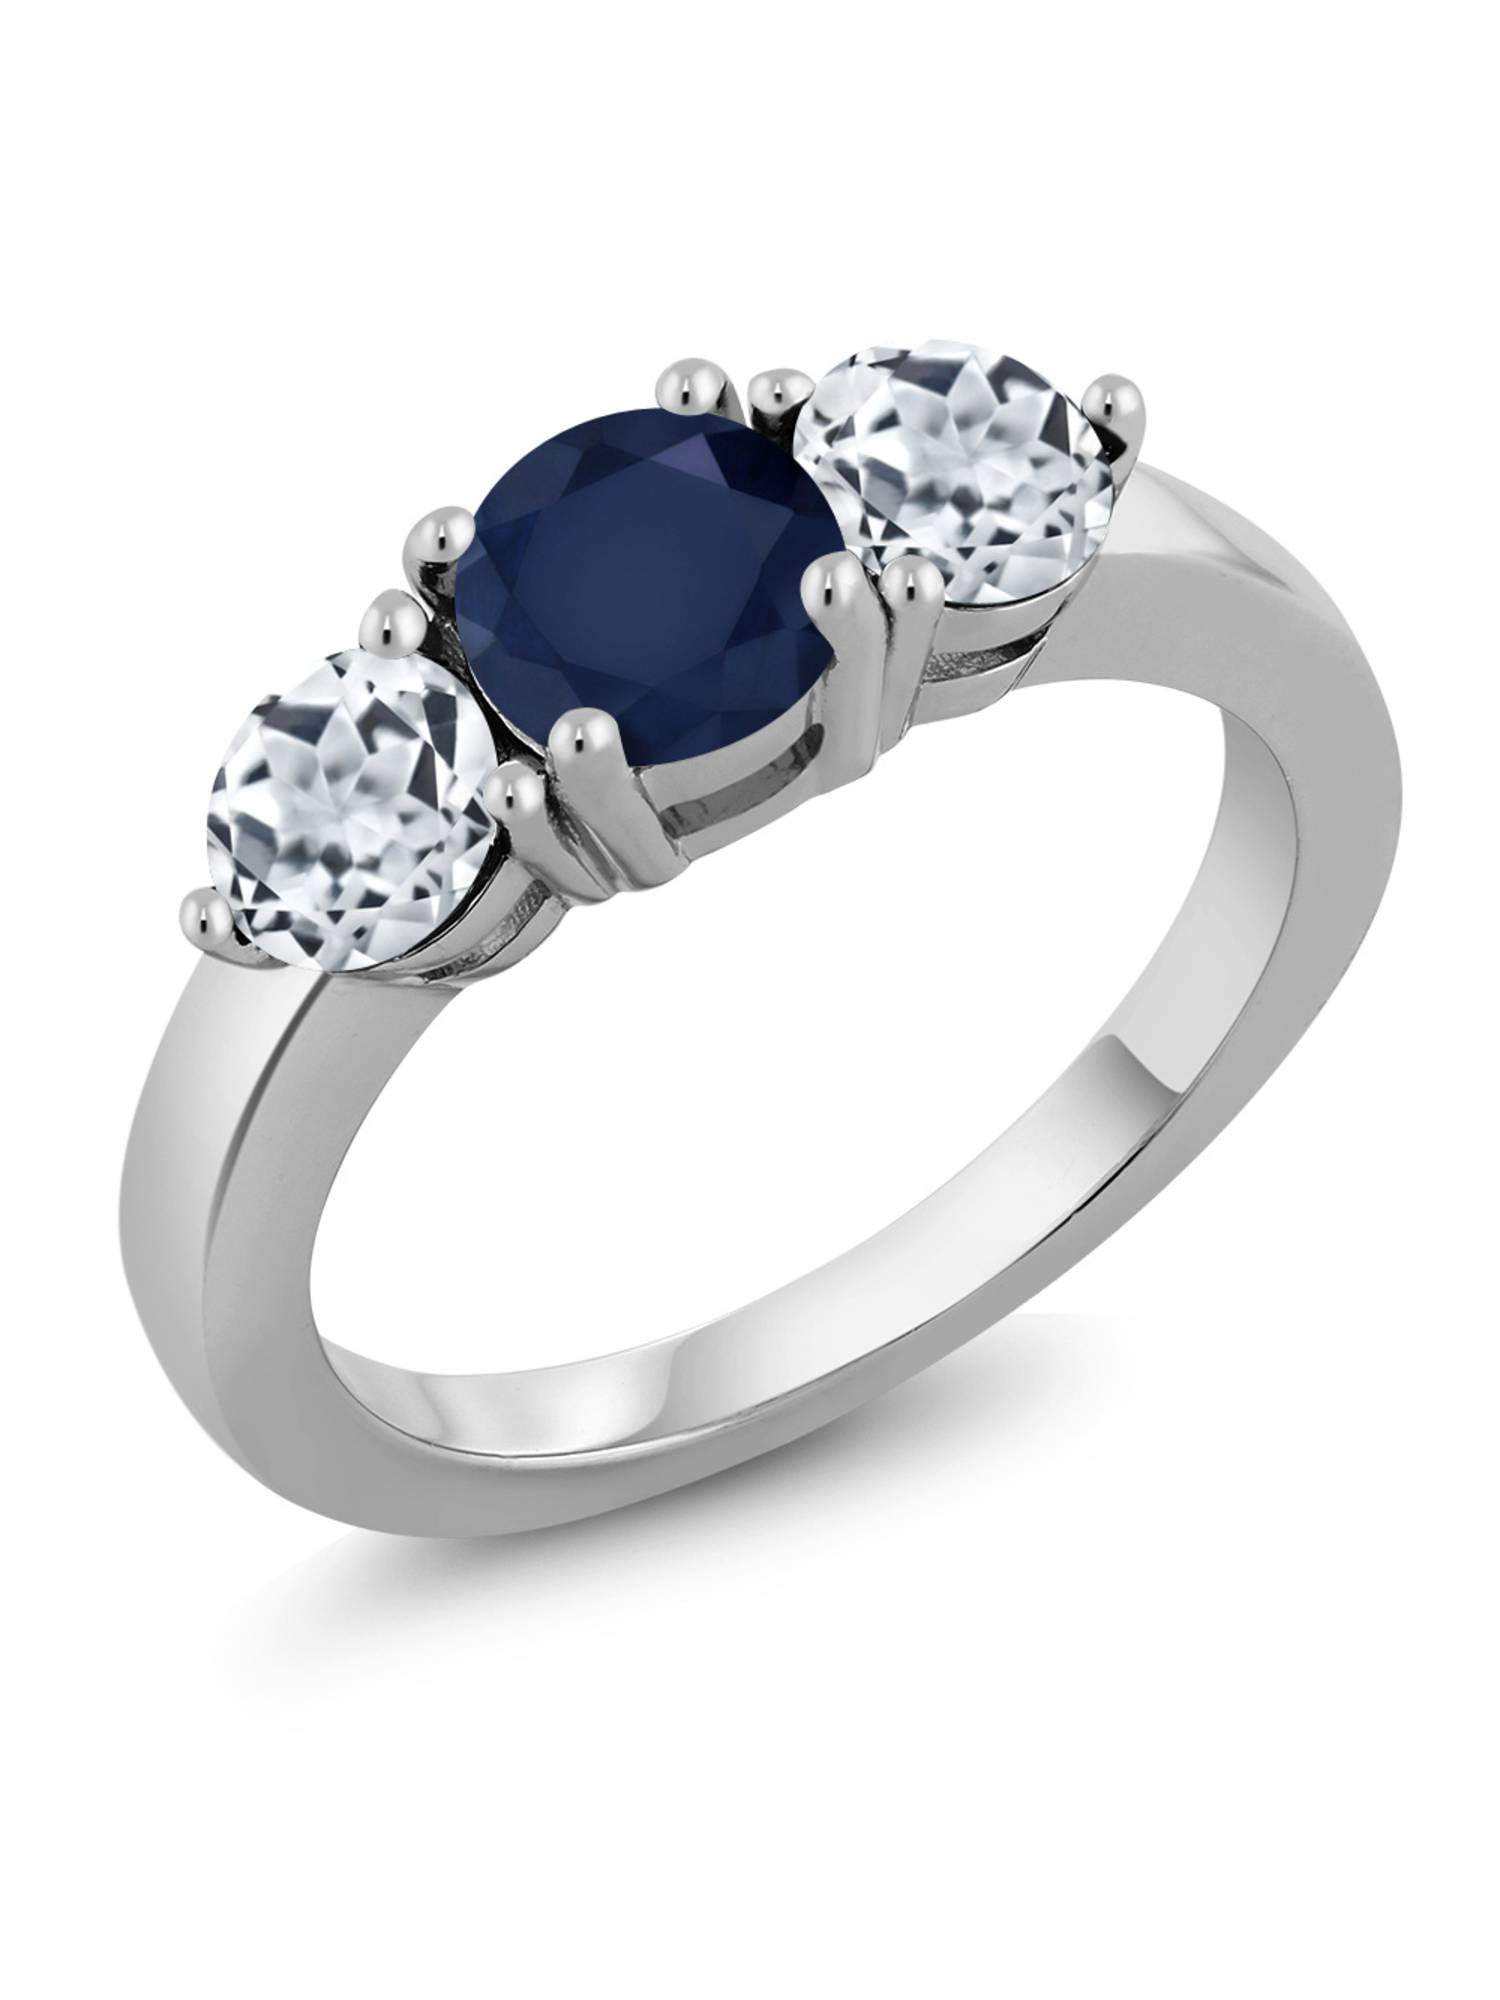 2.00ct Blue sapphire Cushion Cut Diamond Halo 925 Sterling Silver Wedding Ring